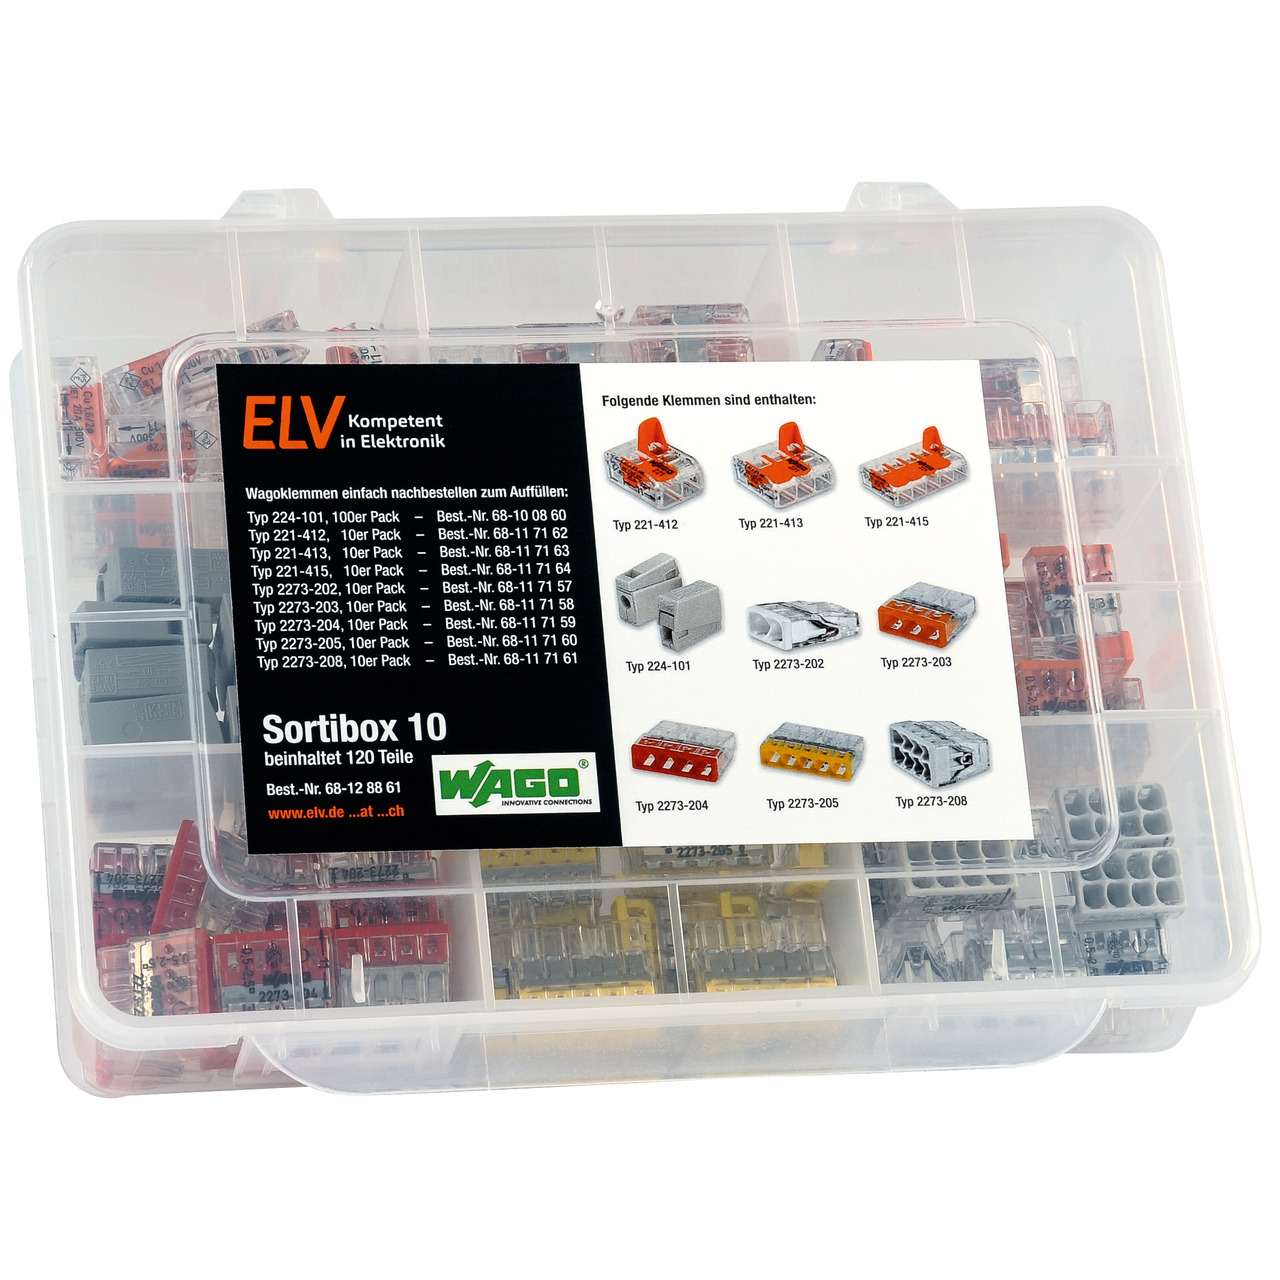 ELV Wago-Sortimentsbox Nr- 10 mit 120 Wago-Klemmen